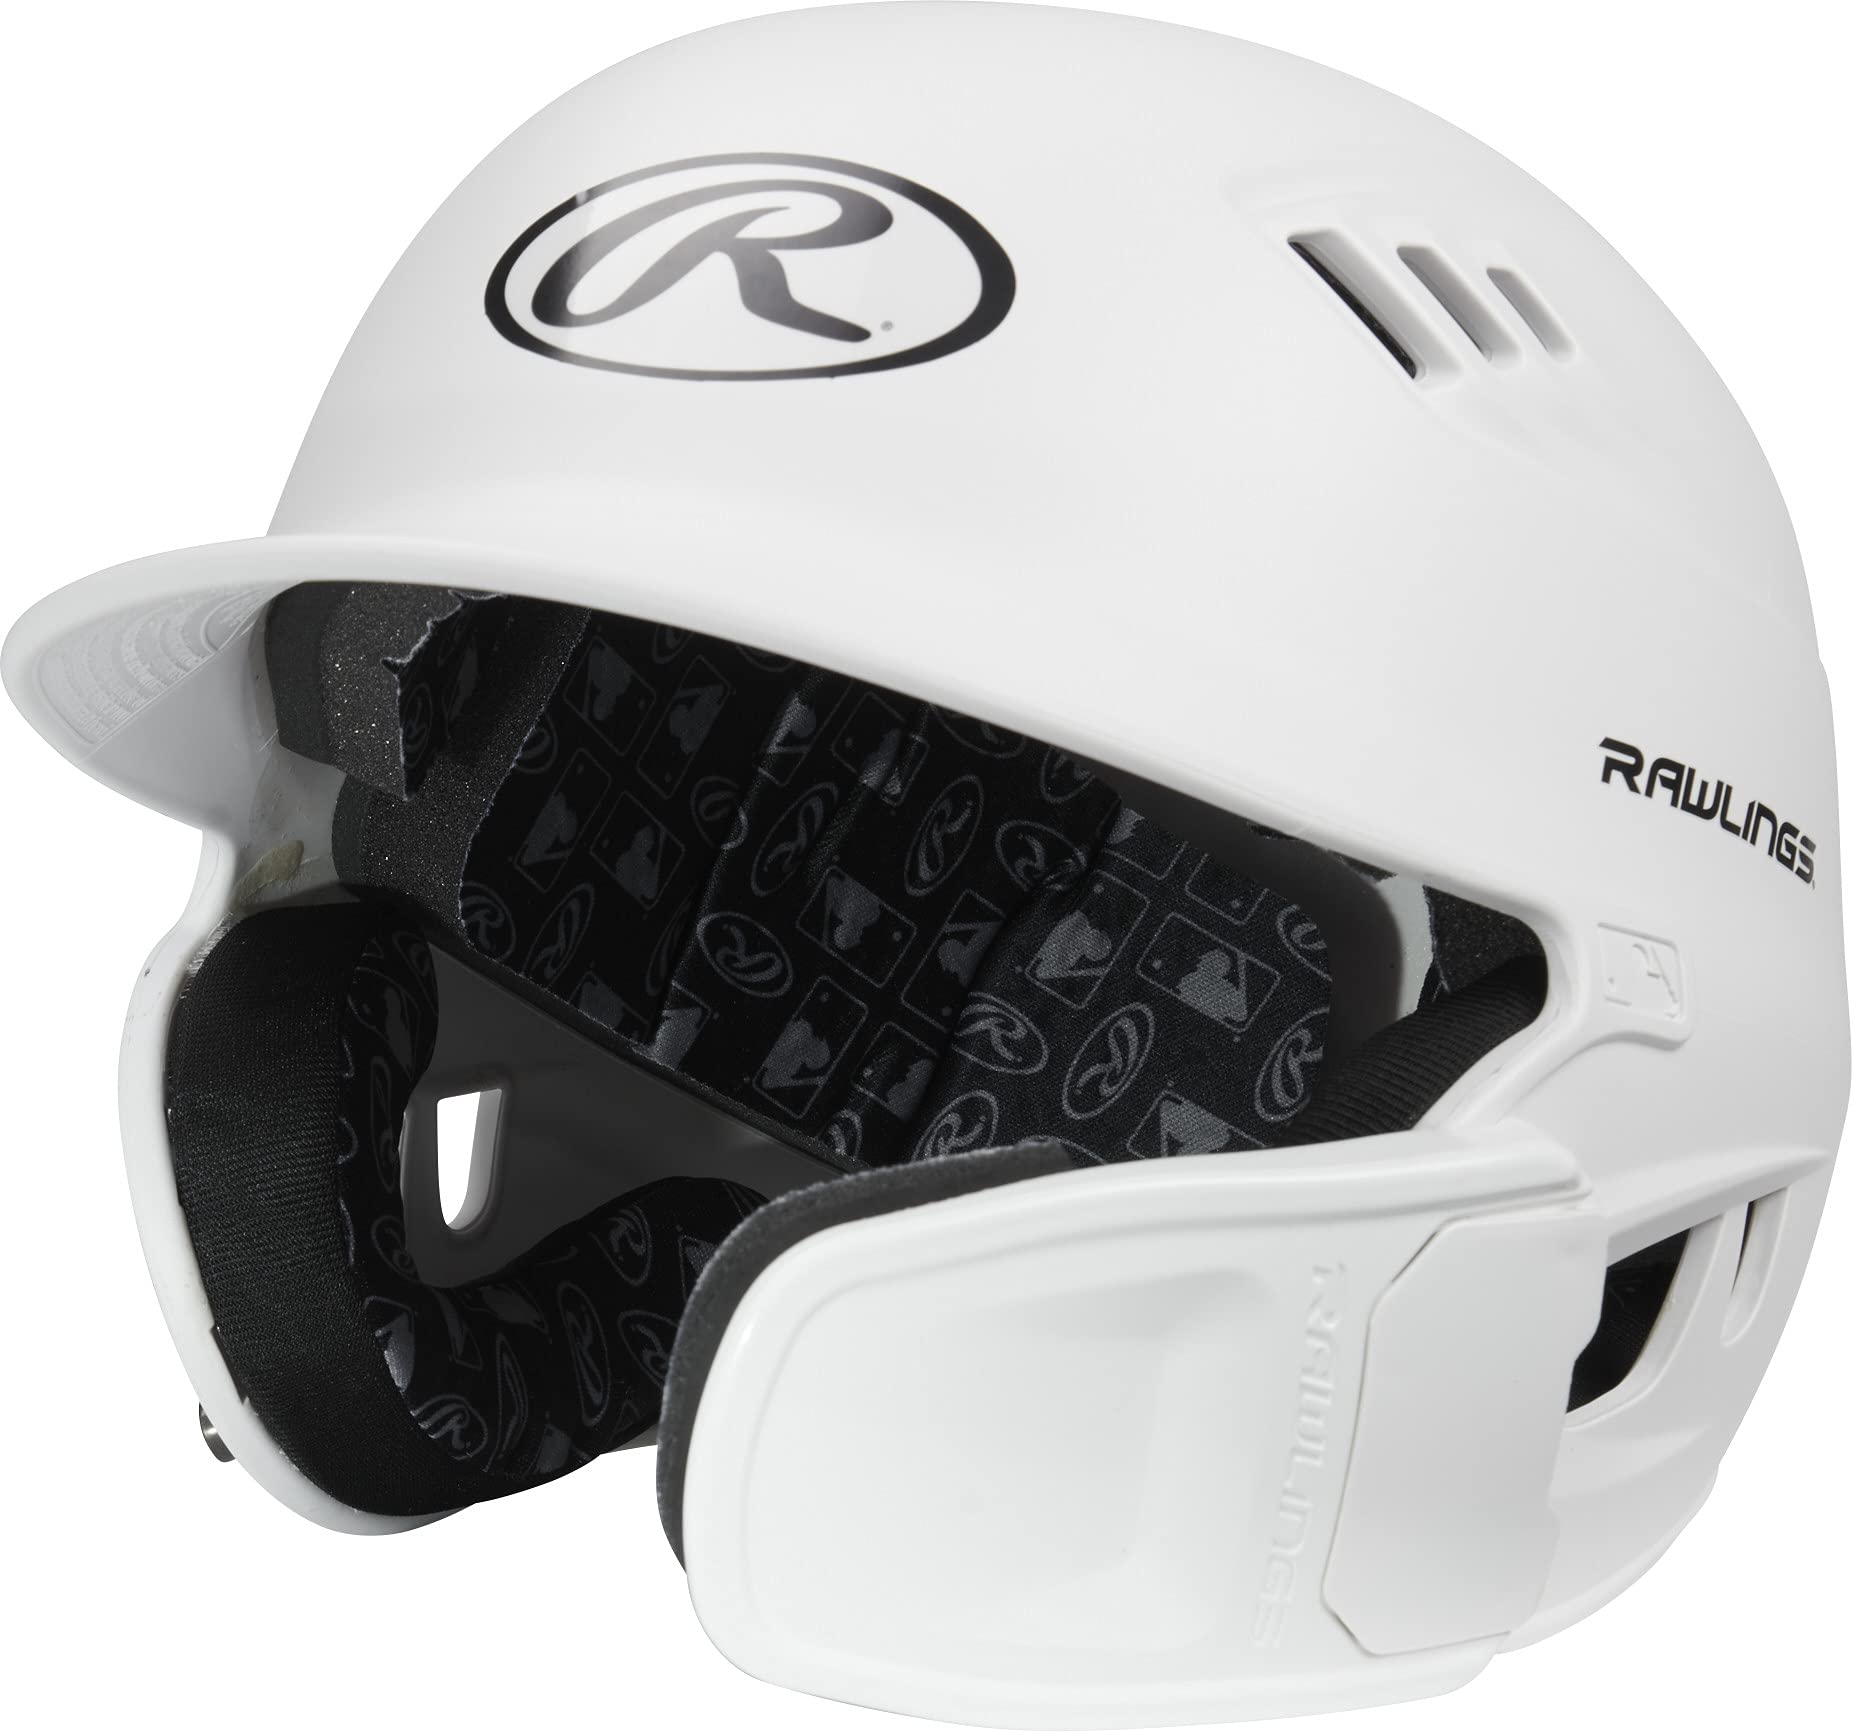 Rawlings  R16 Reversible EXT  Matte Batting Helmet  Reversible Face guard  Junior  Matte White